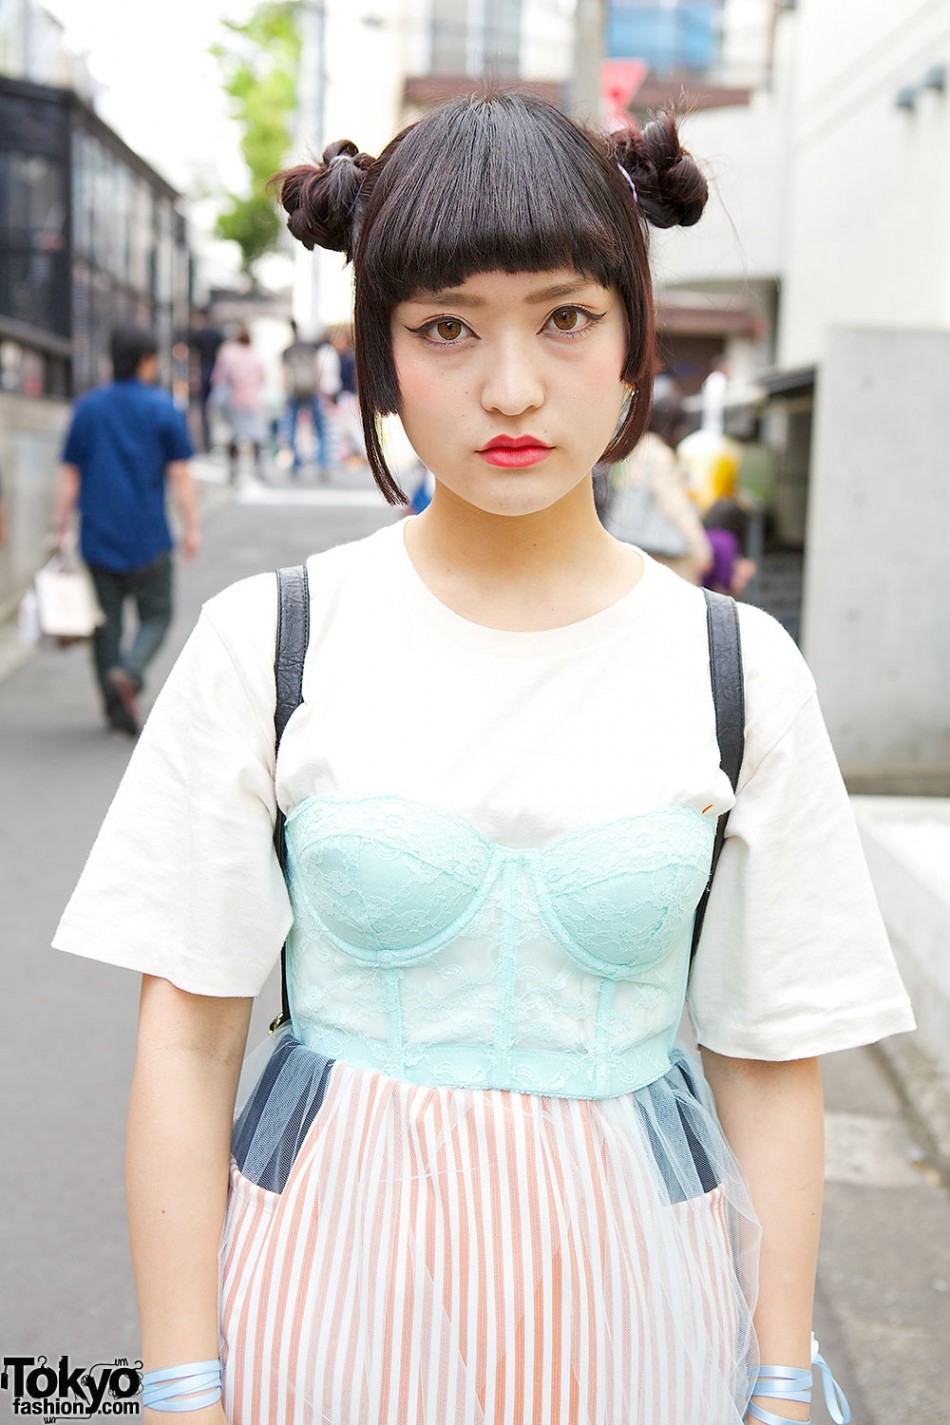 Harajuku Girls W Twin Buns Sheer Skirts Cheongsam And Platforms Tokyo Fashion 